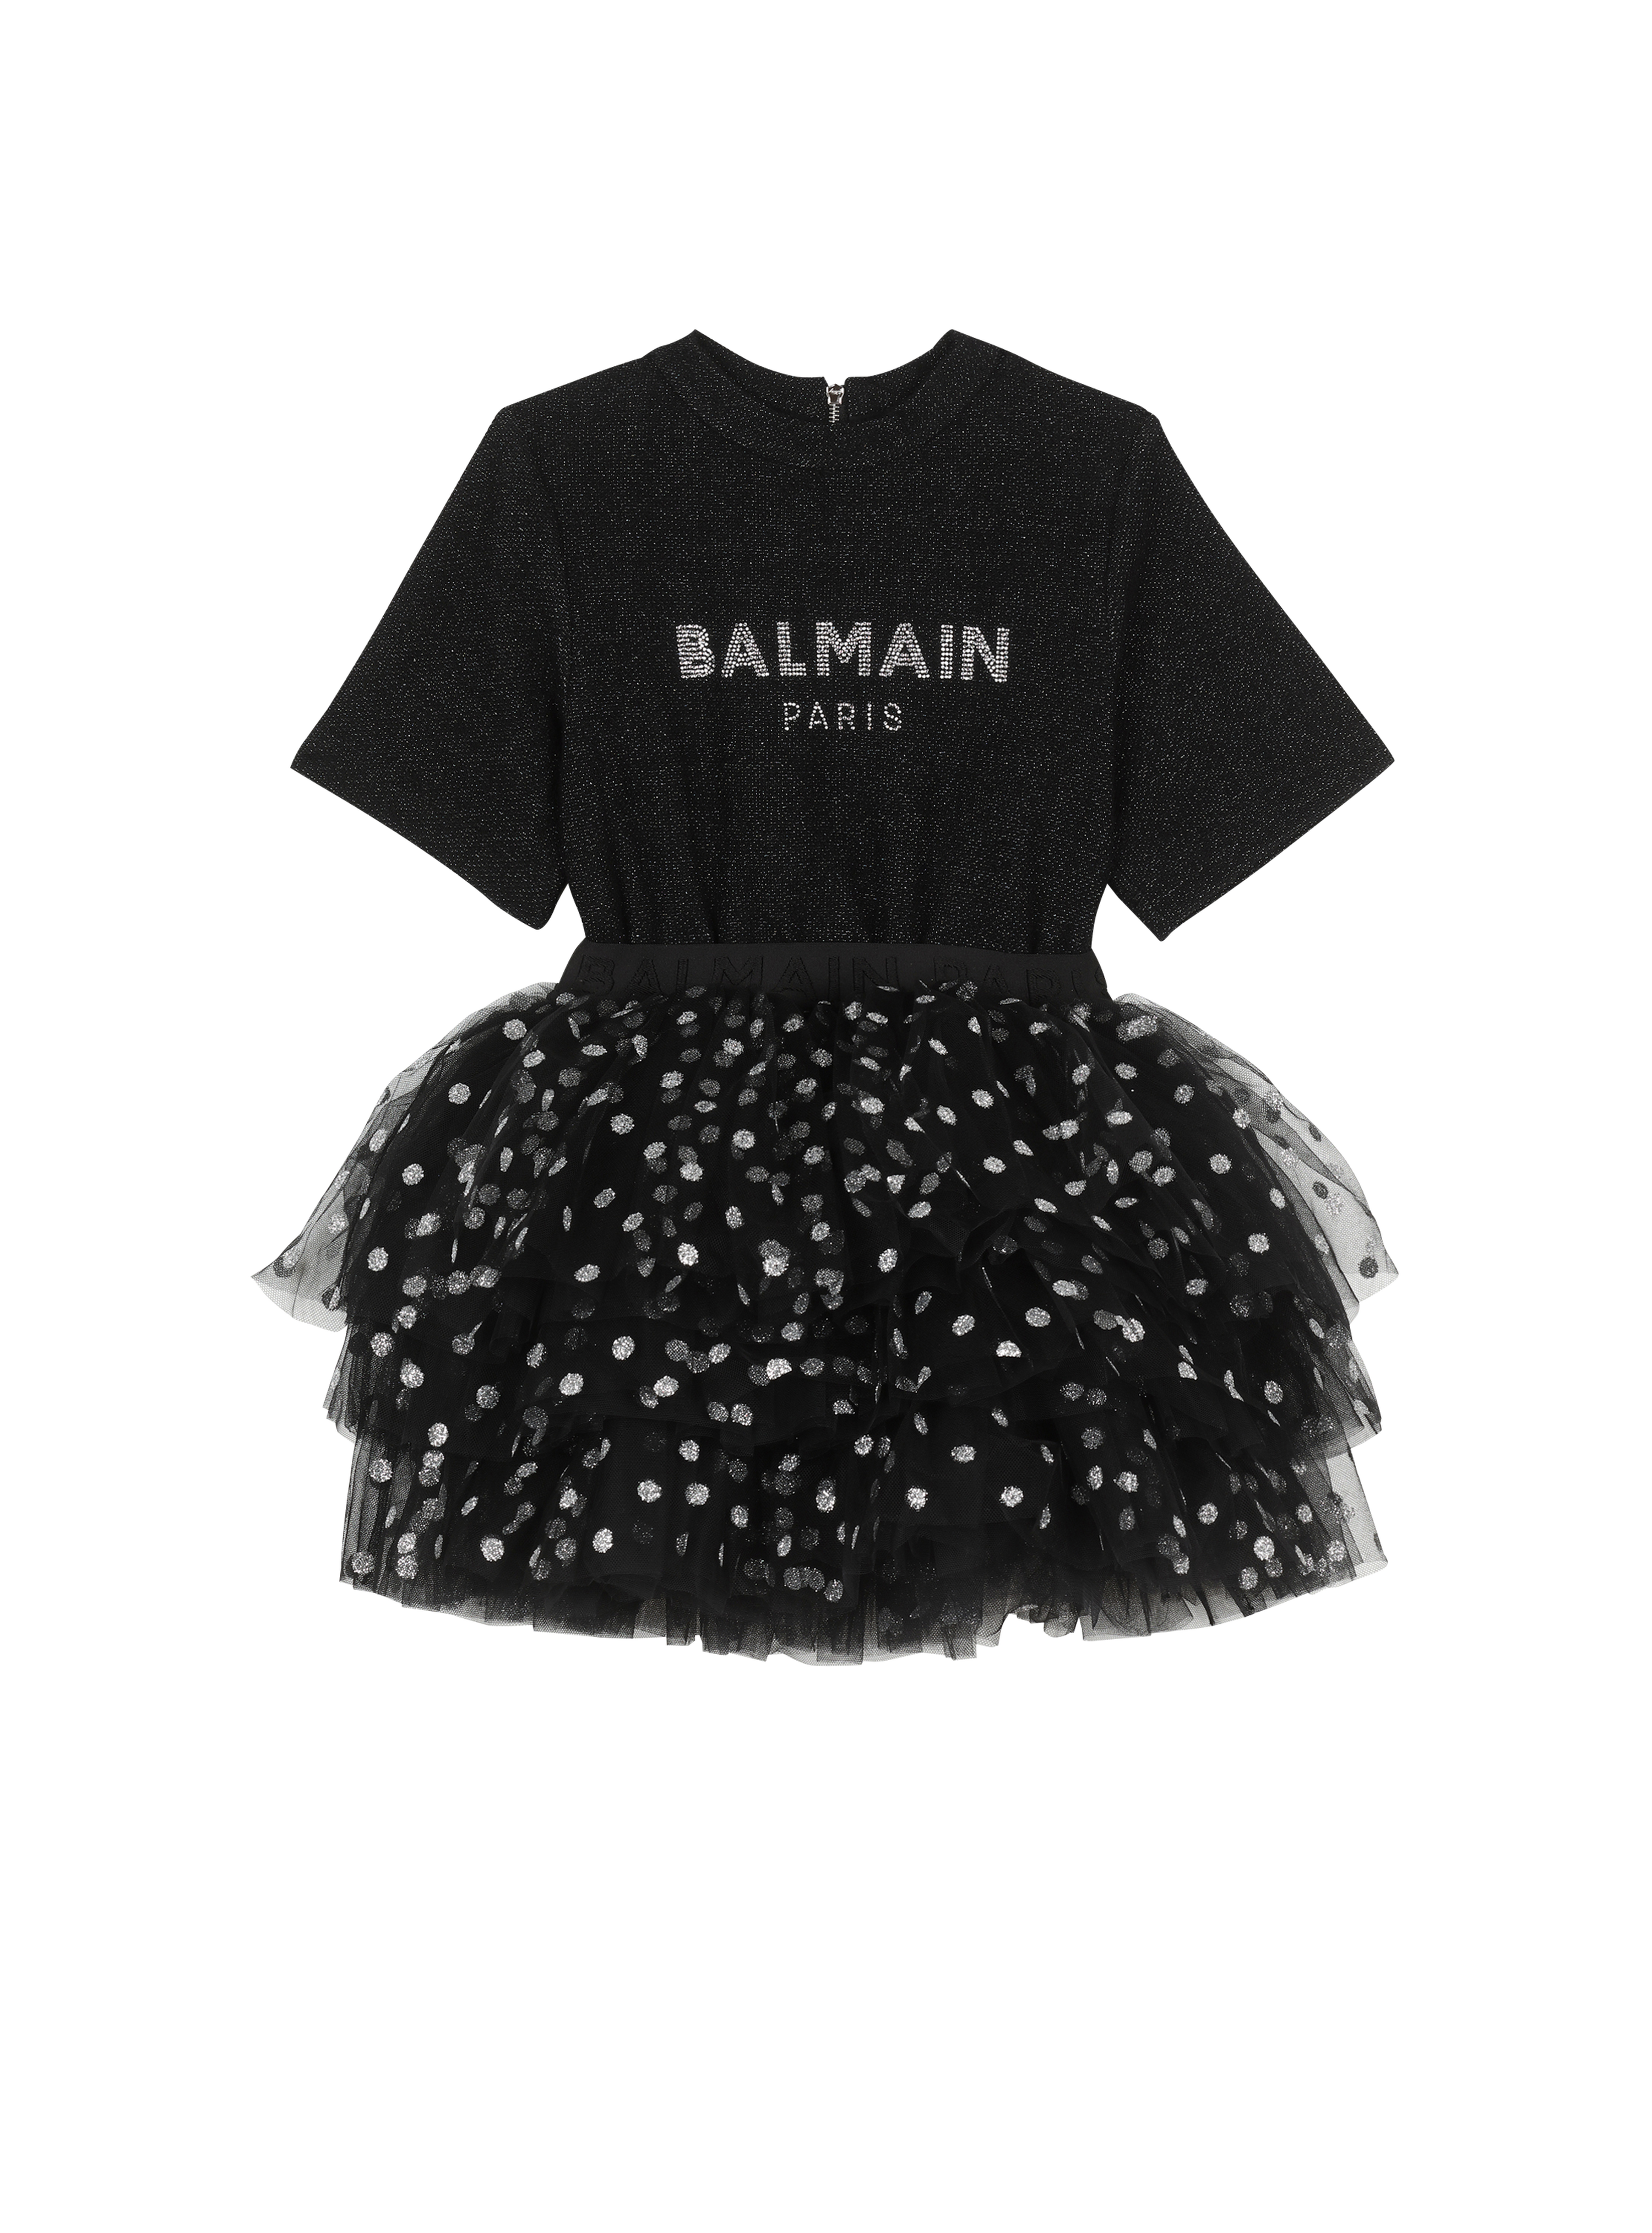 Cotton dress with Balmain logo, black